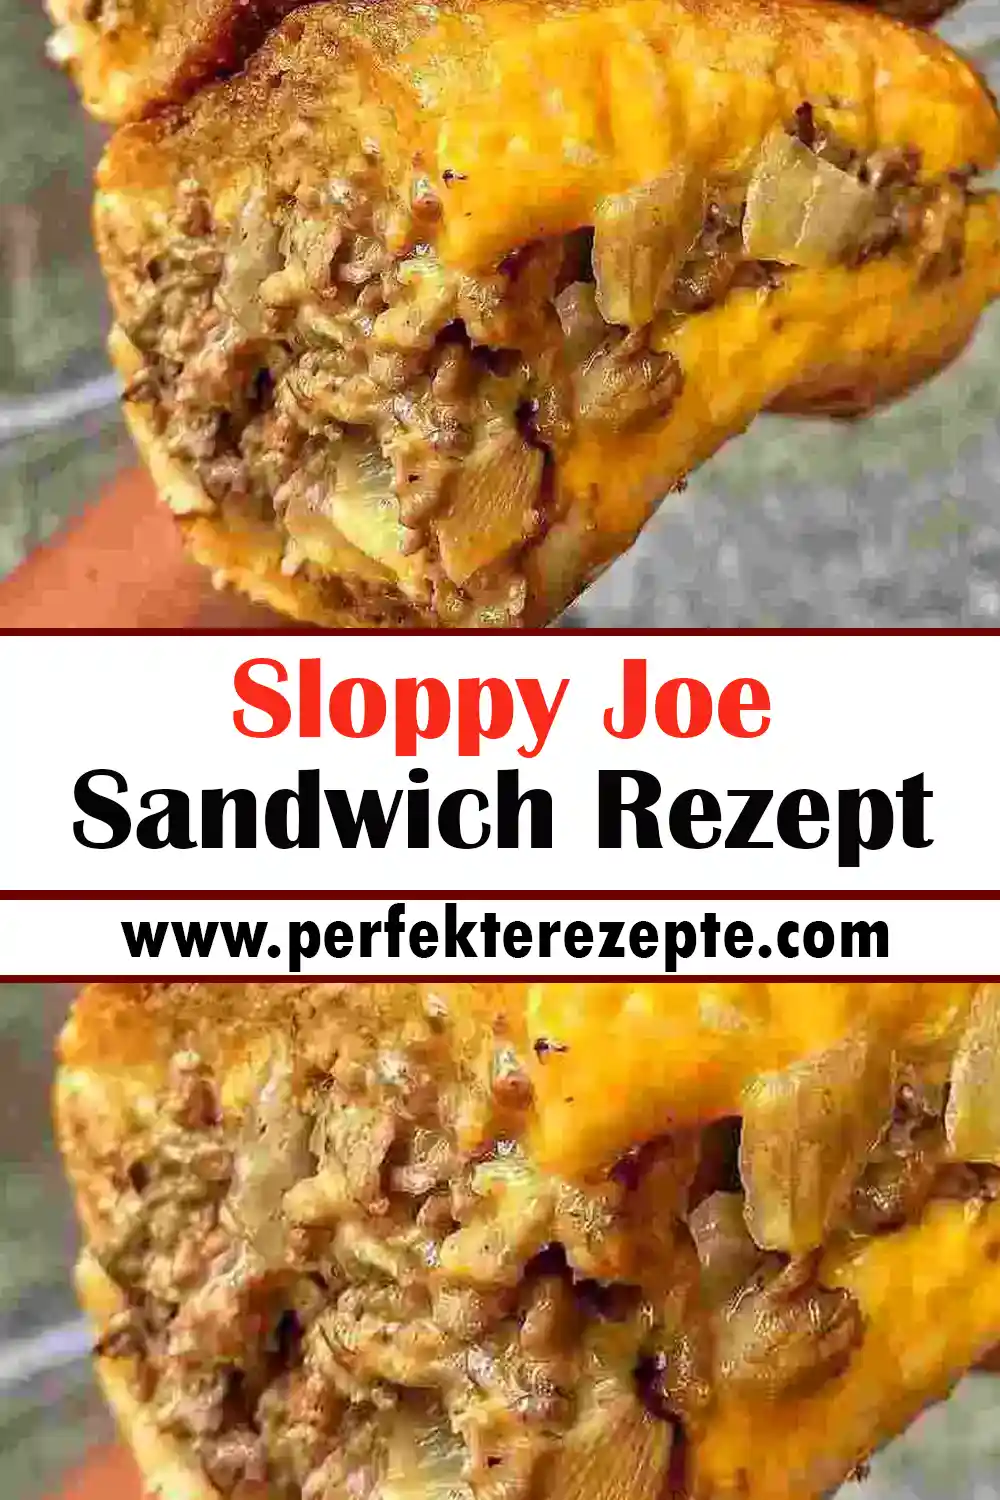 Sloppy Joe Sandwich Rezept